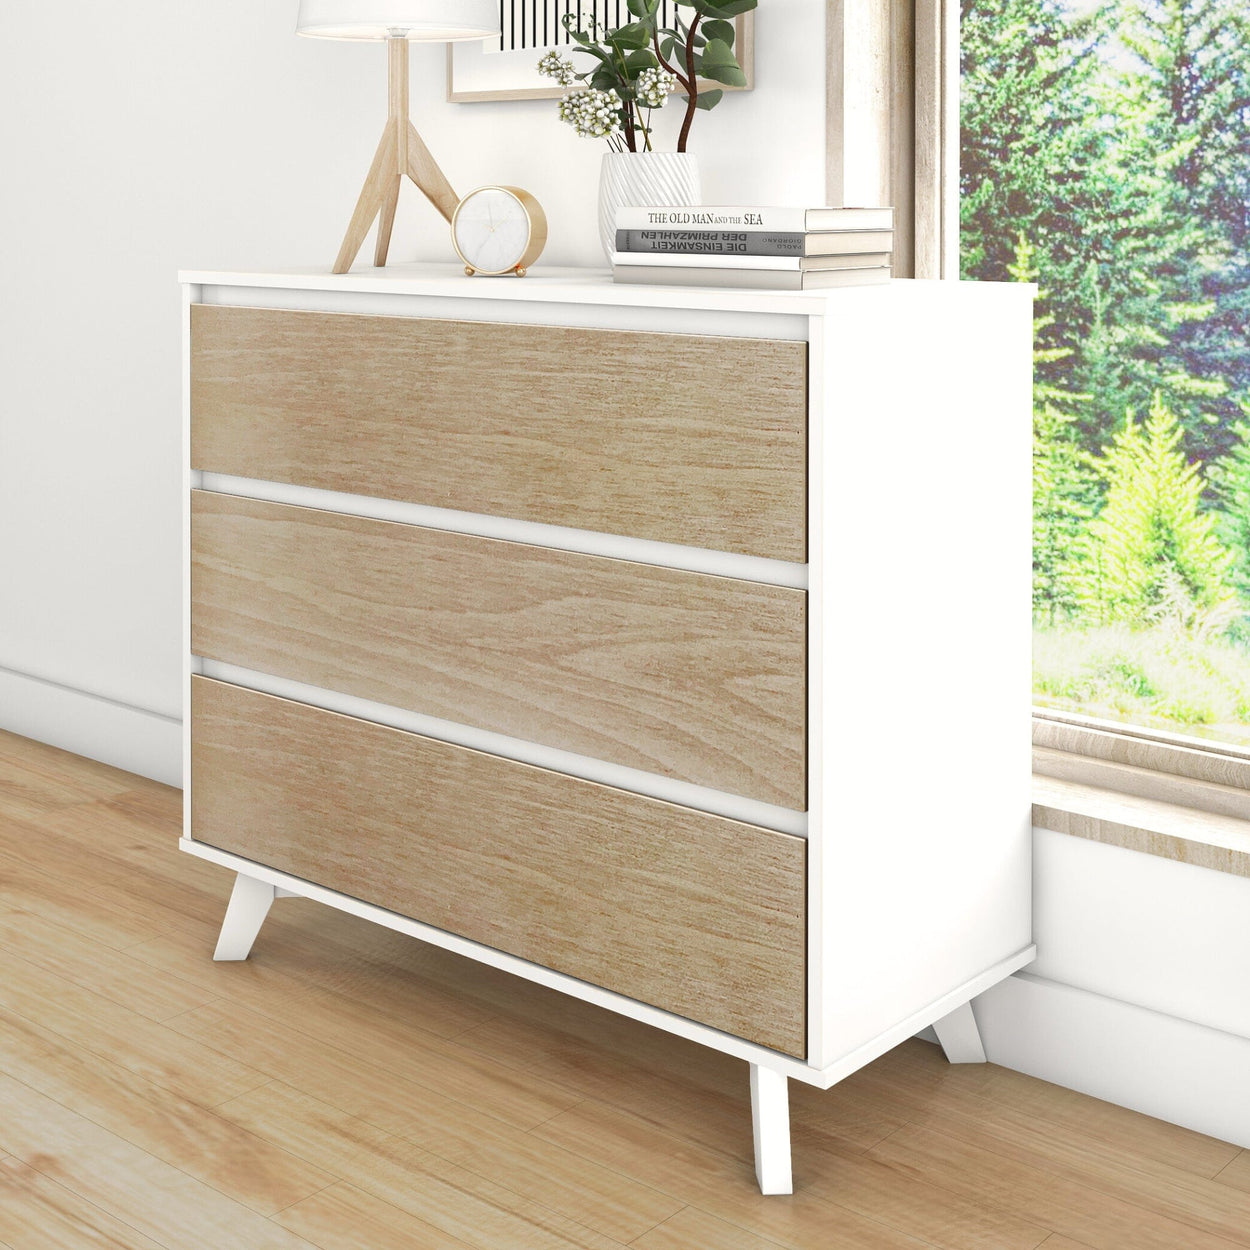 210003-202 : Furniture Scandinavian 3-Drawer Dresser, White/Blonde